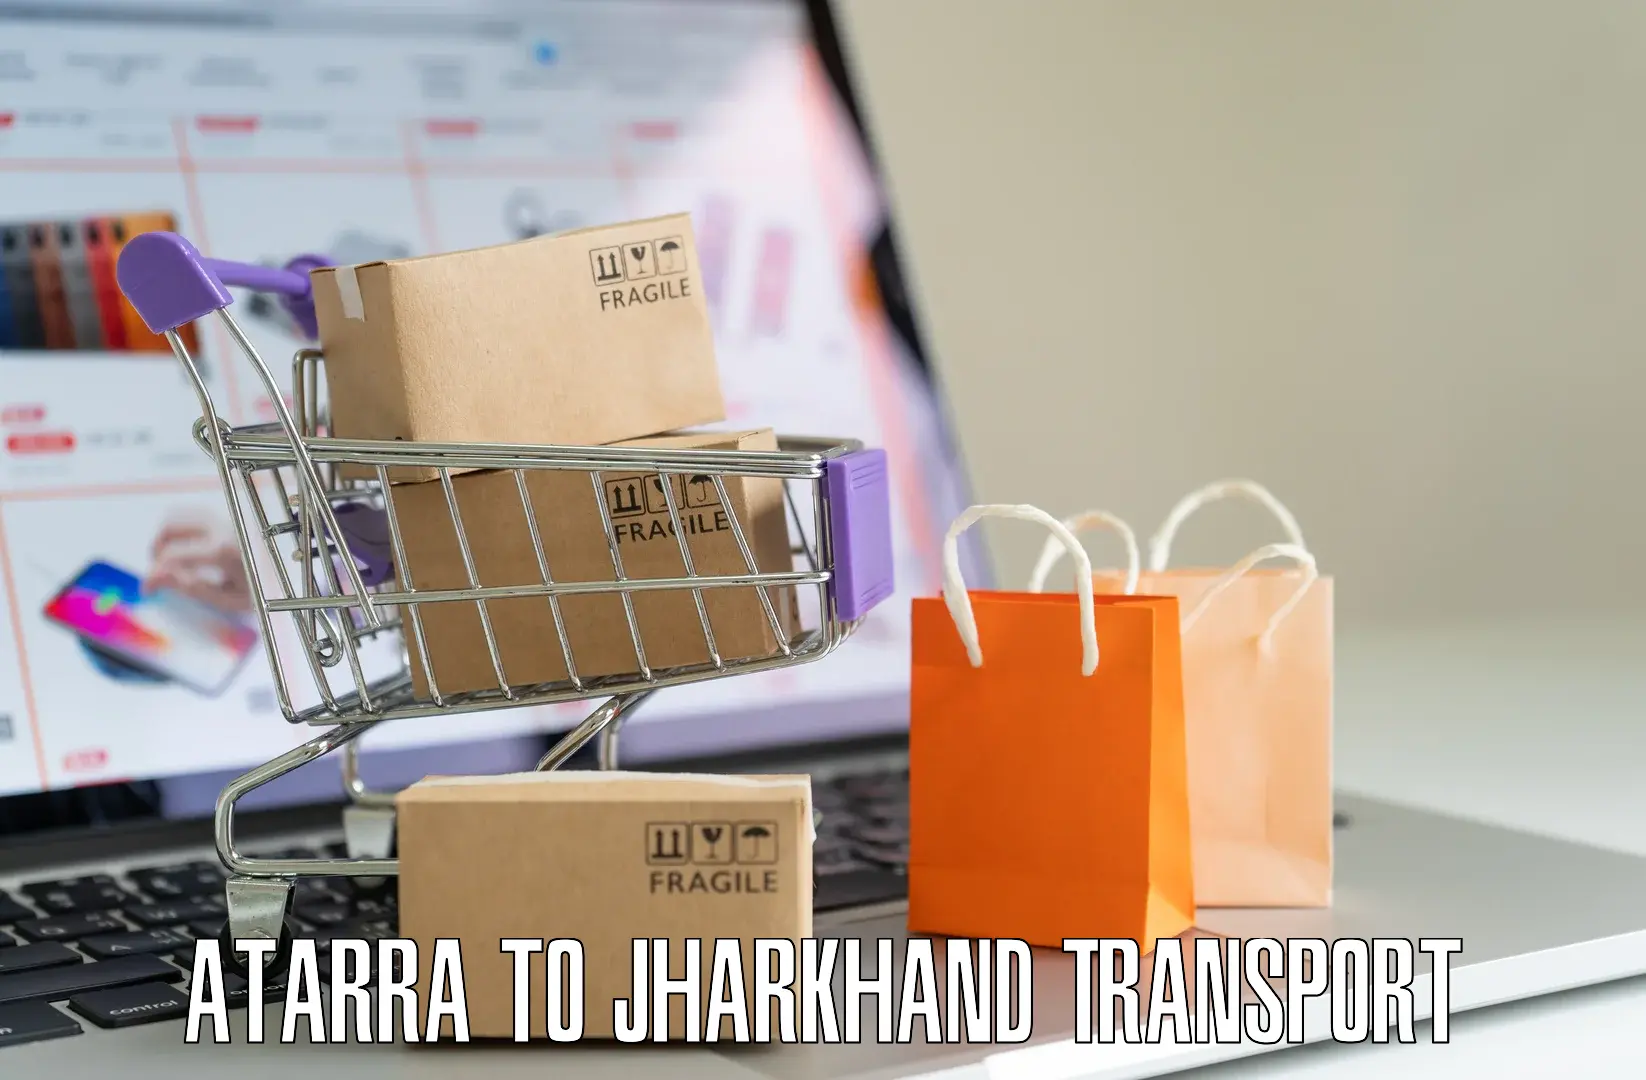 Transport shared services Atarra to Jamshedpur